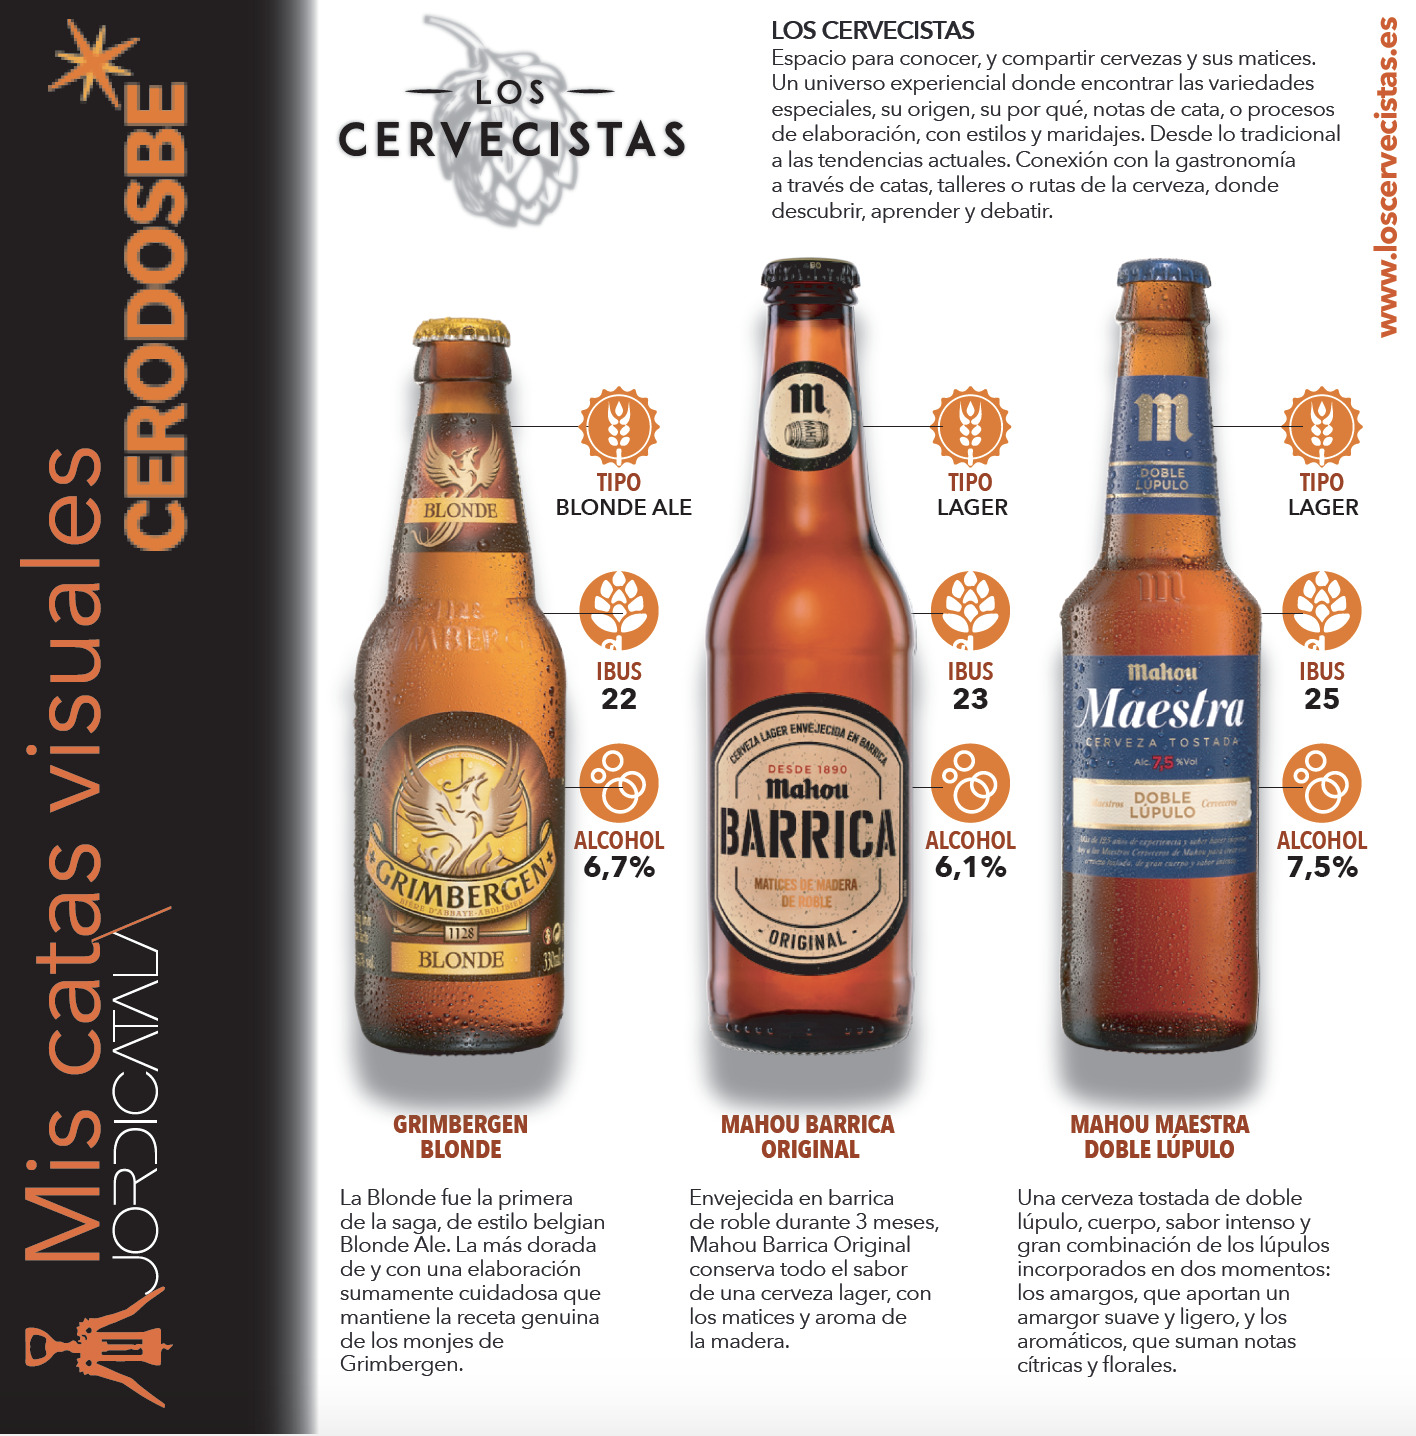 Info 3: Los Cervecistas